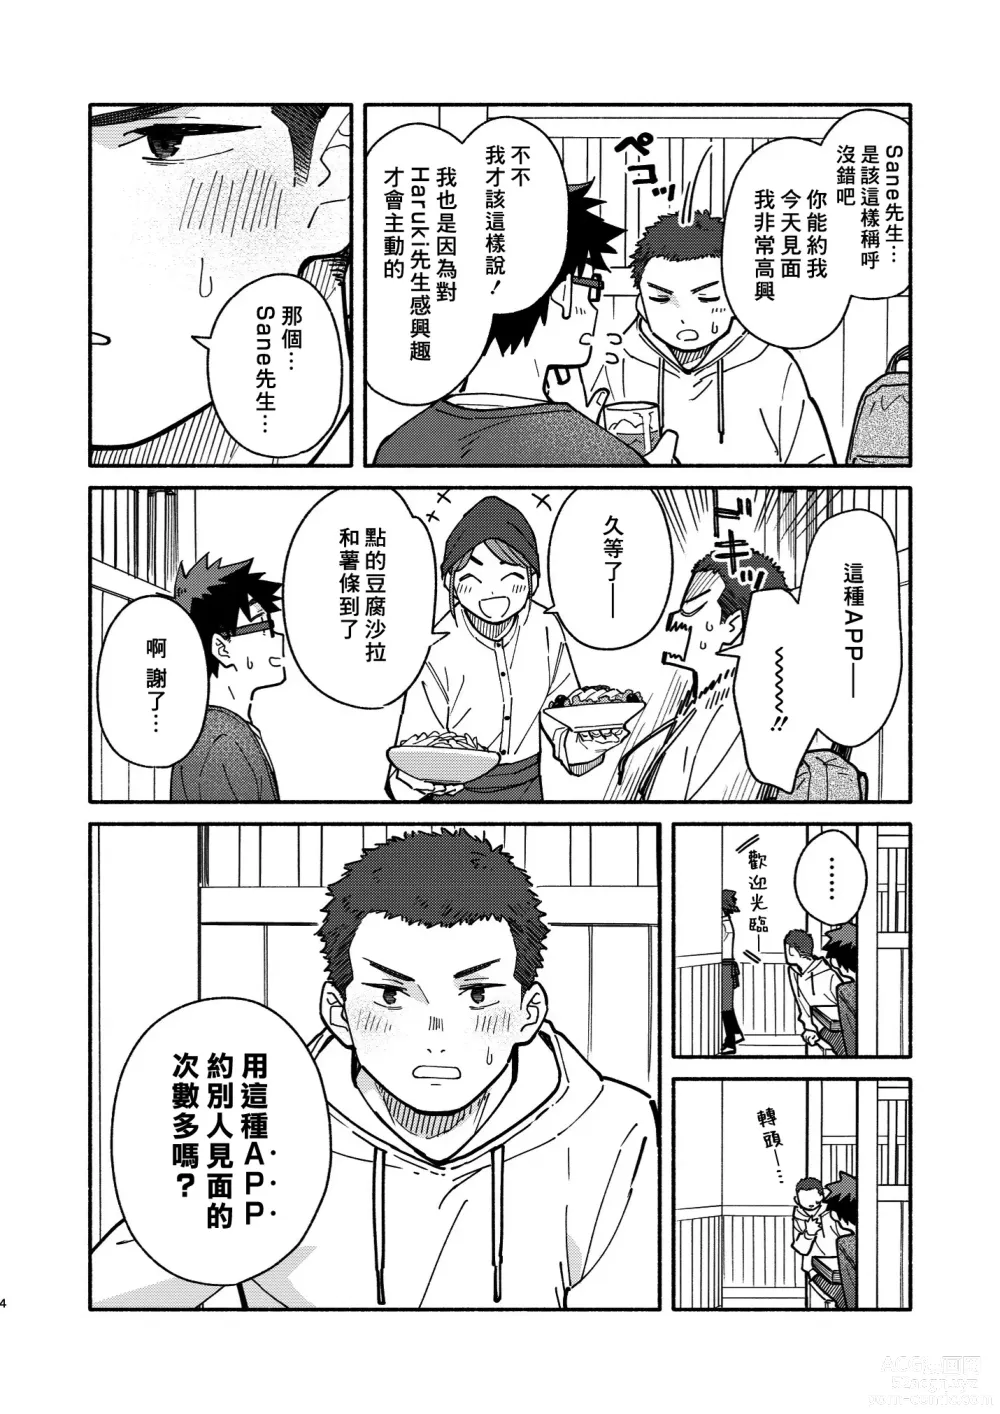 Page 3 of doujinshi 那就、下回見。